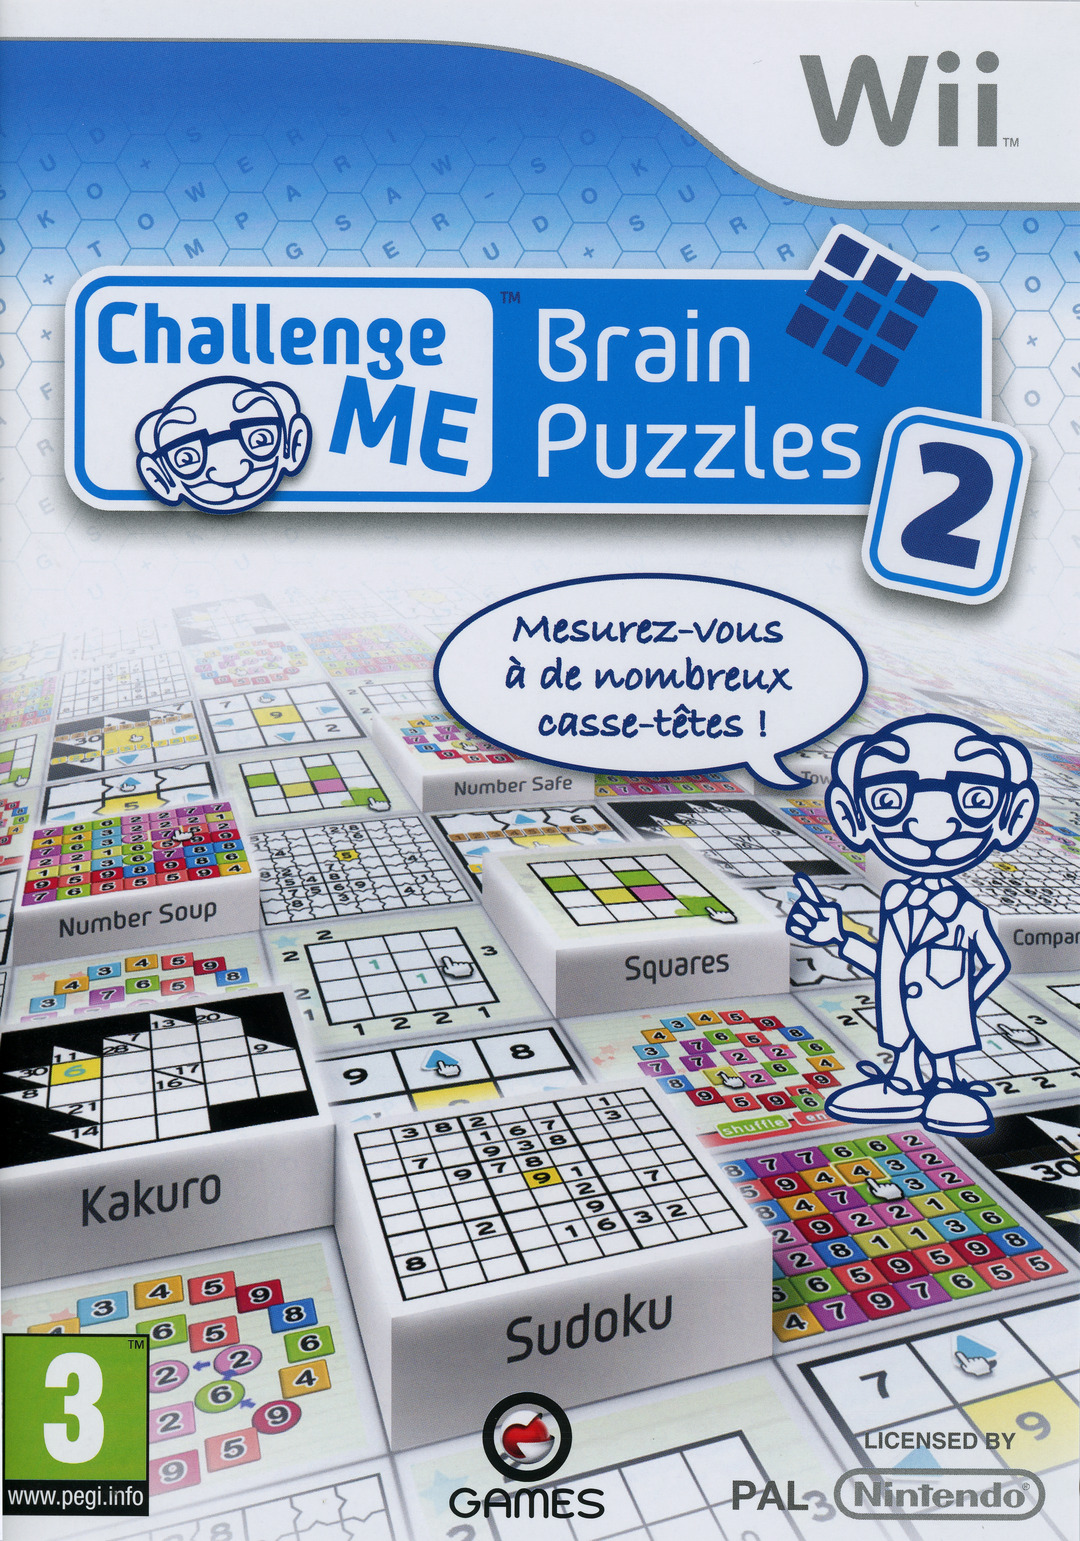 Brain puzzle game. Brain Puzzle игра. Головоломка NDS. Nintendo DS головоломка. Brain Puzzles логические игры.